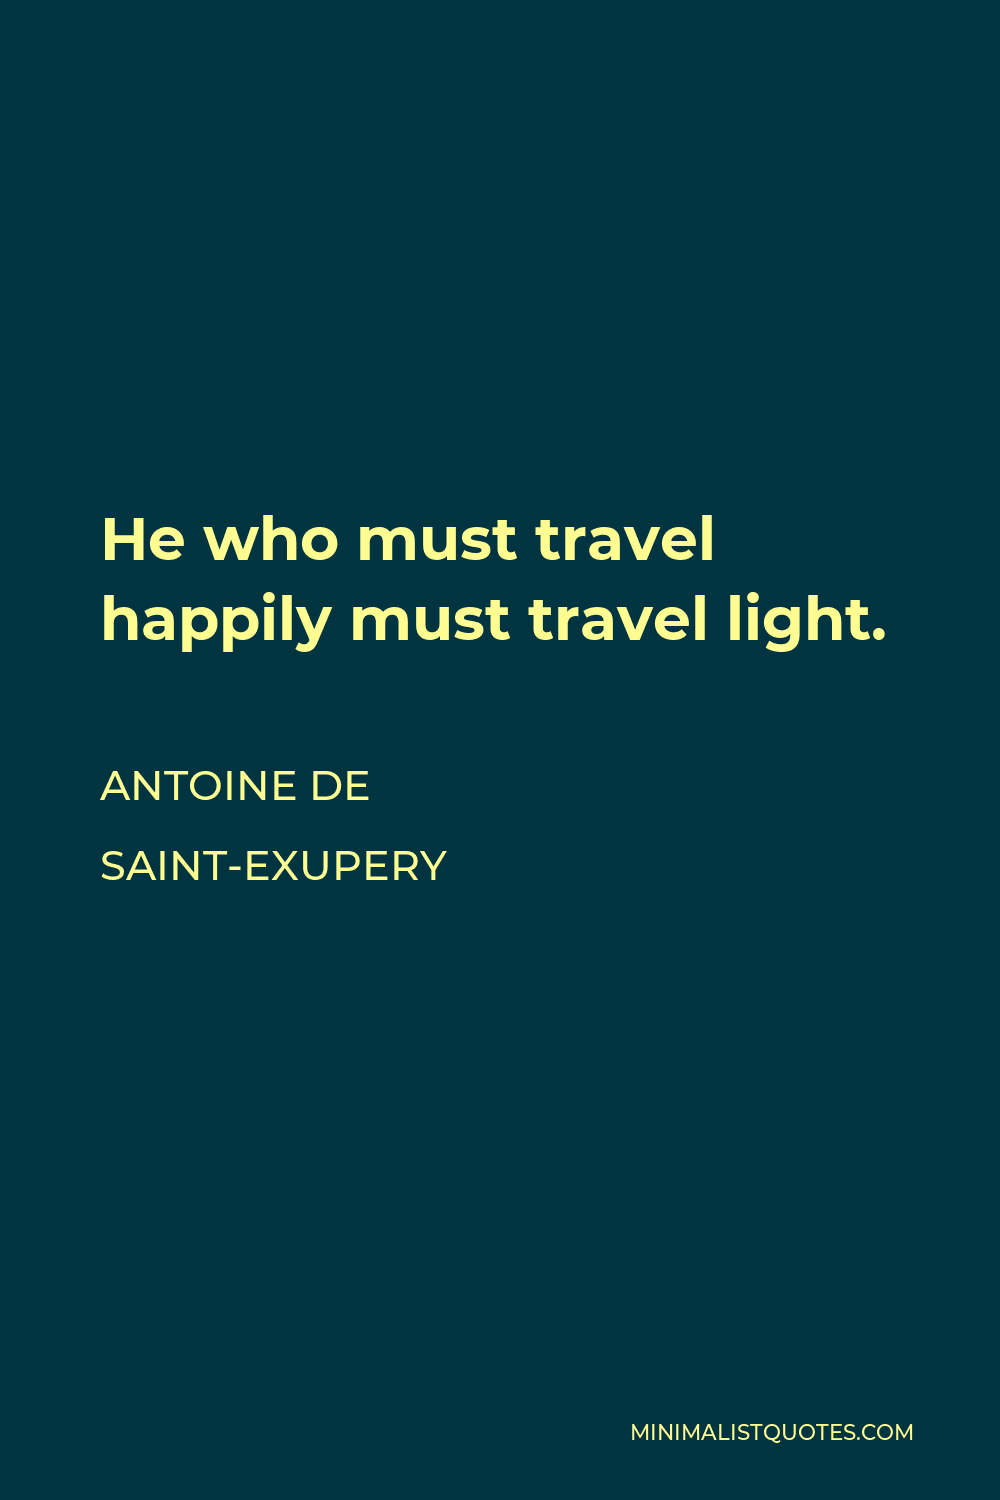 Antoine de Saint-Exupery Quote - He who must travel happily must travel light.